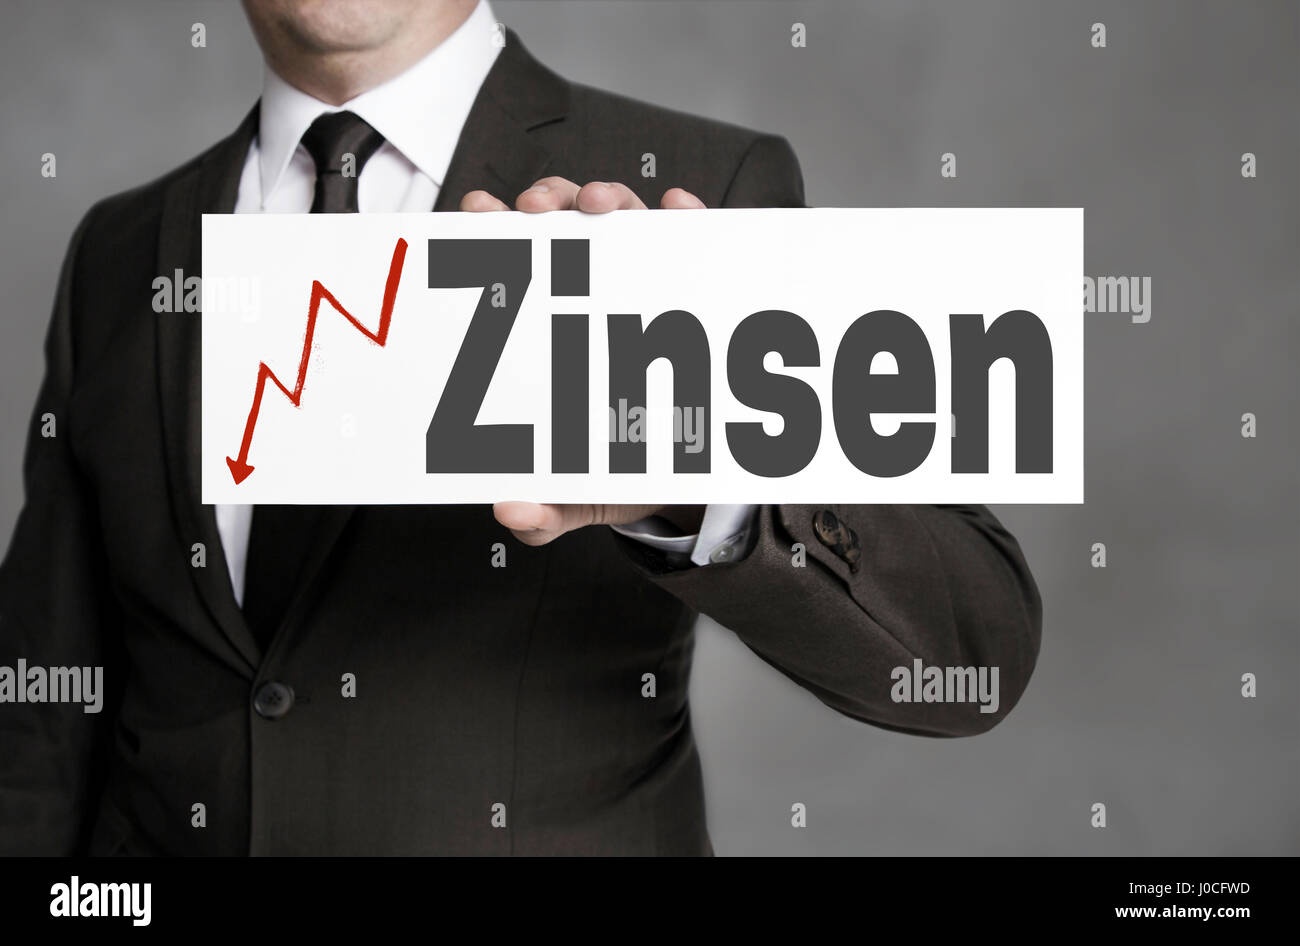 Zinsen (in german Interest) sign is held by businessman. Stock Photo